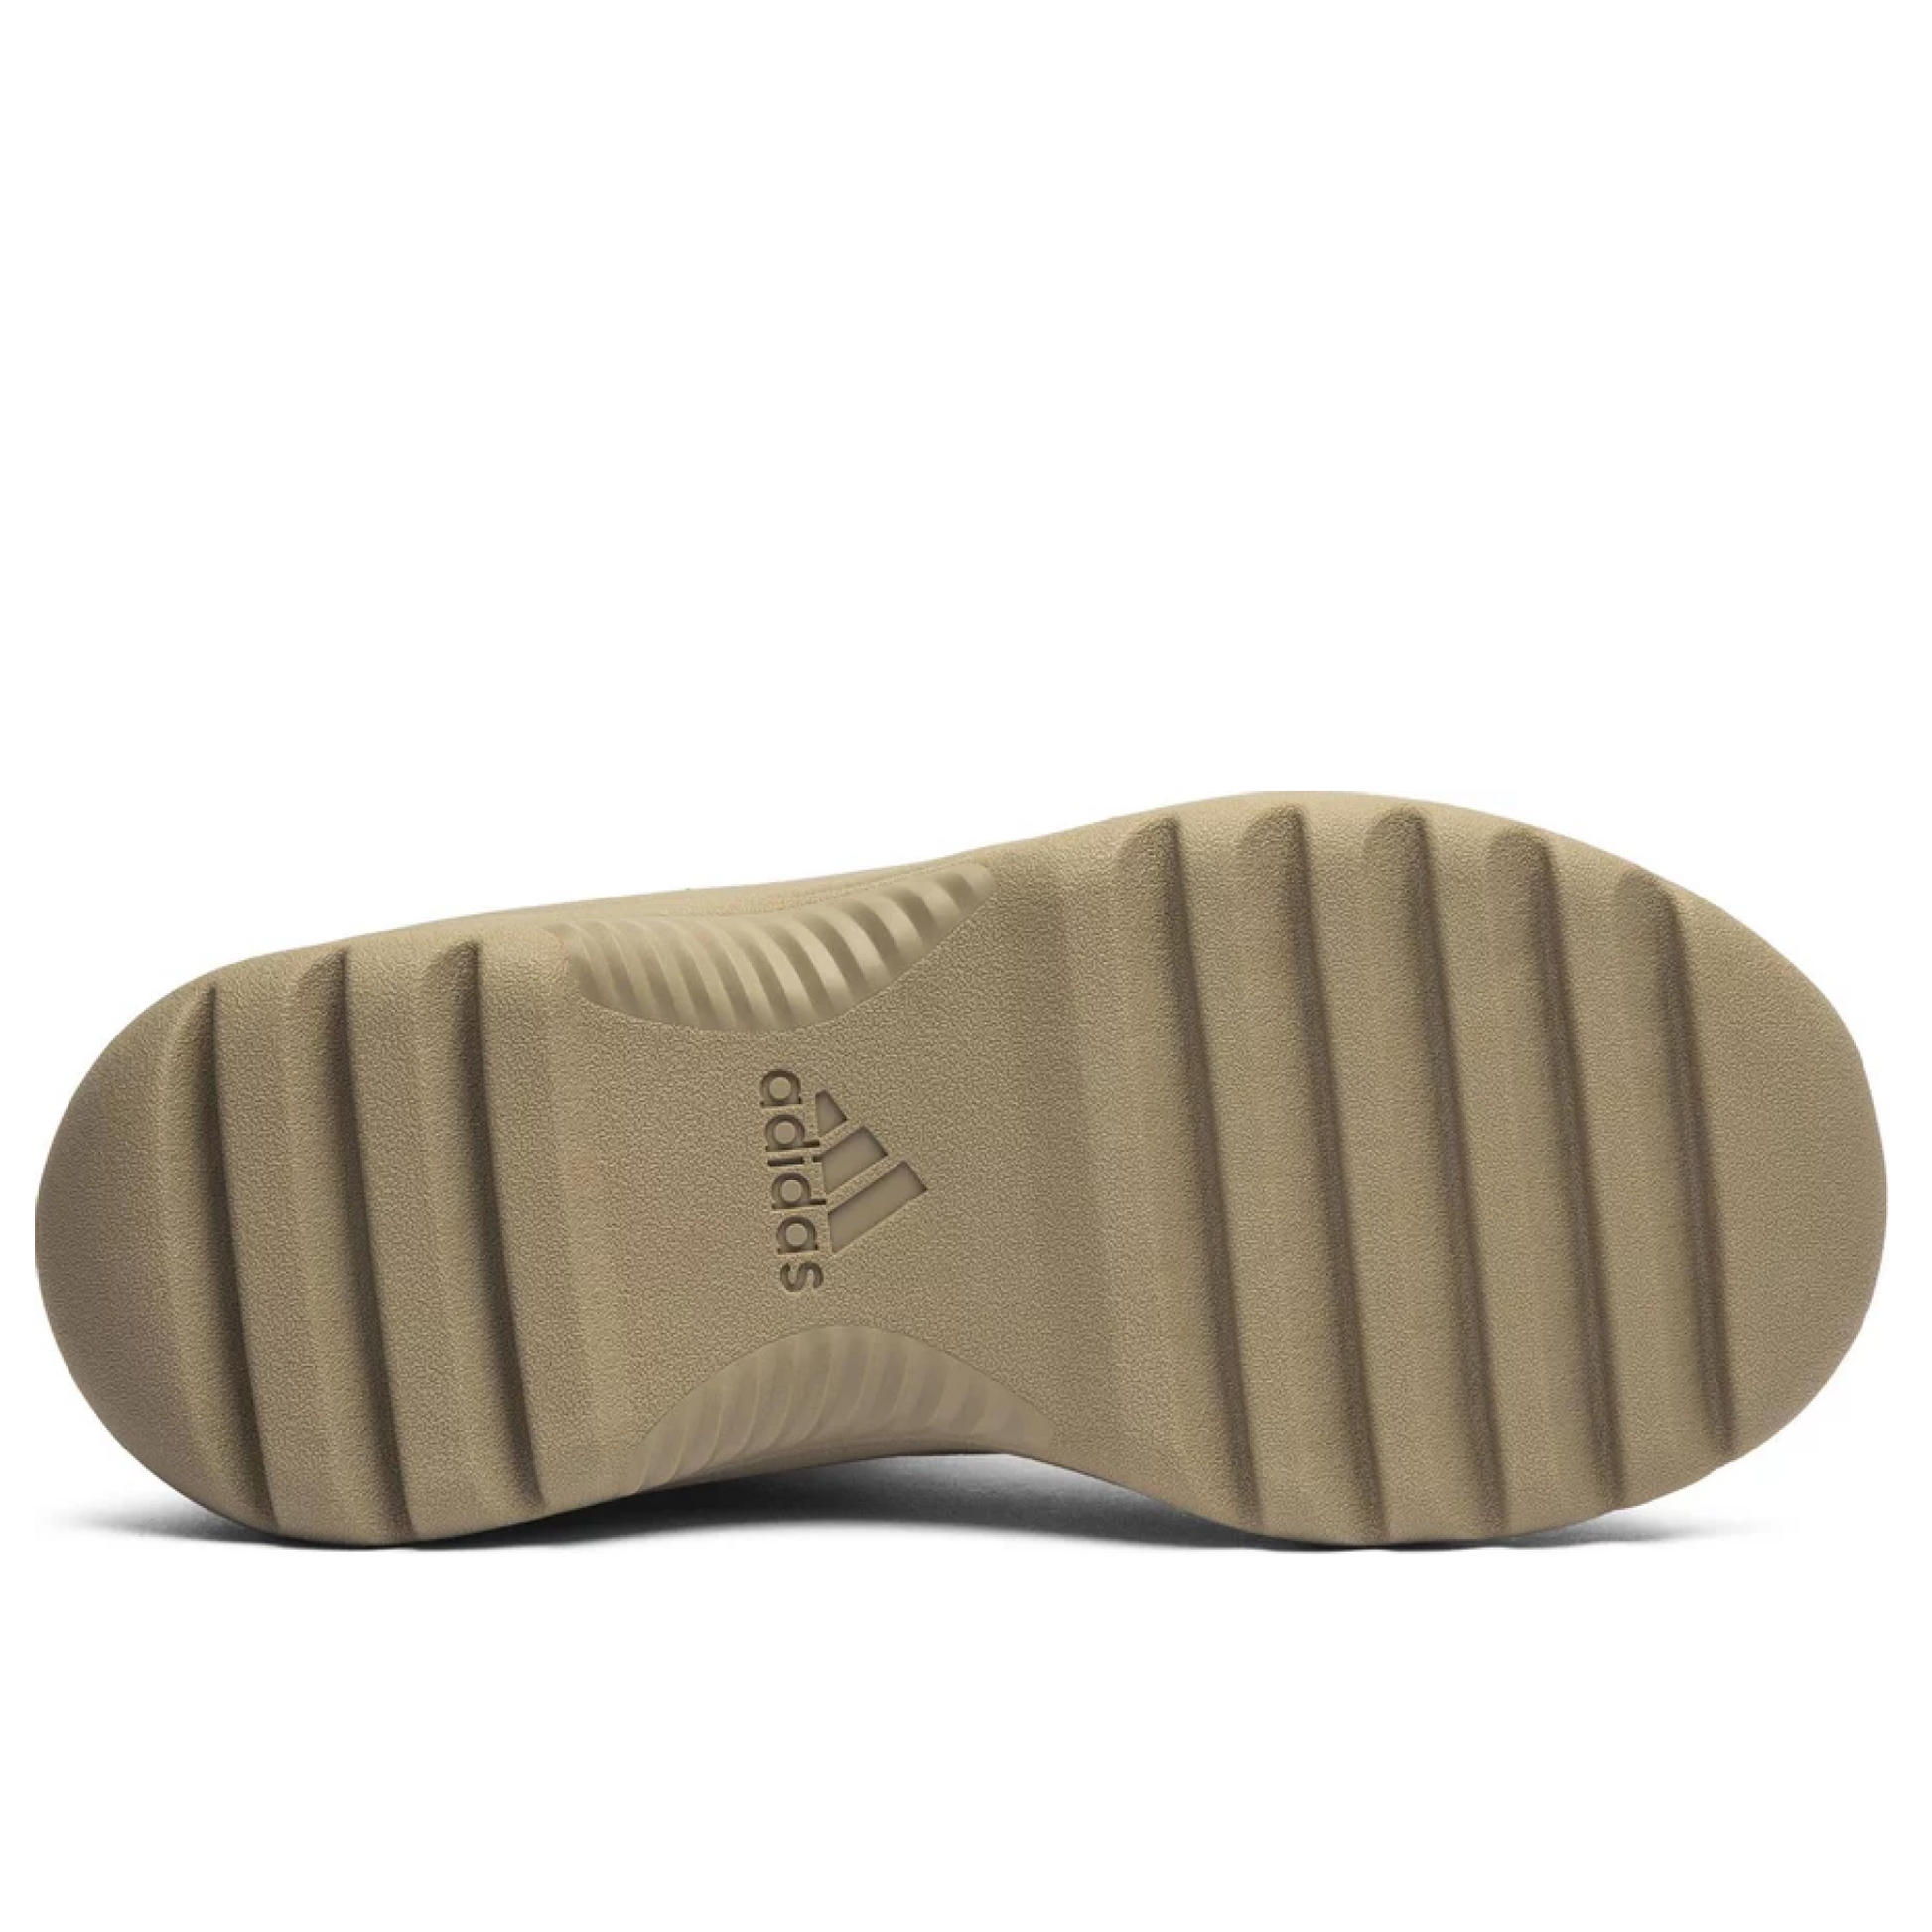 adidas Yeezy Desert Boot Rock Adidas